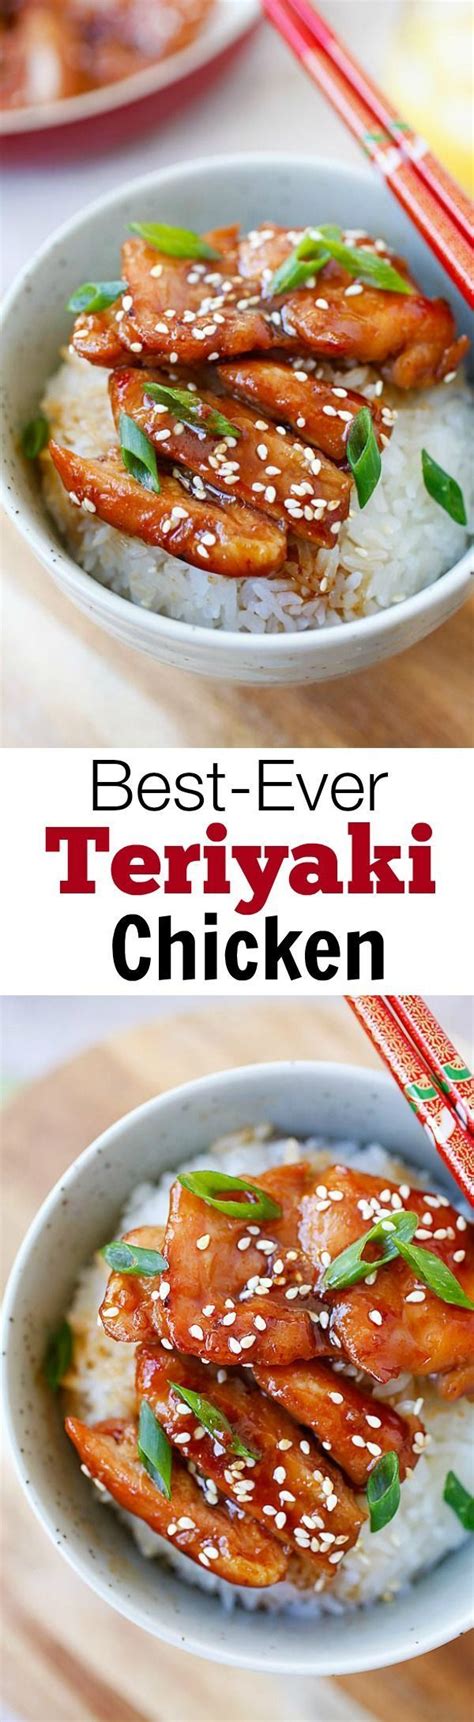 Teriyaki Chicken The Most Popular Japanese Chicken Dish